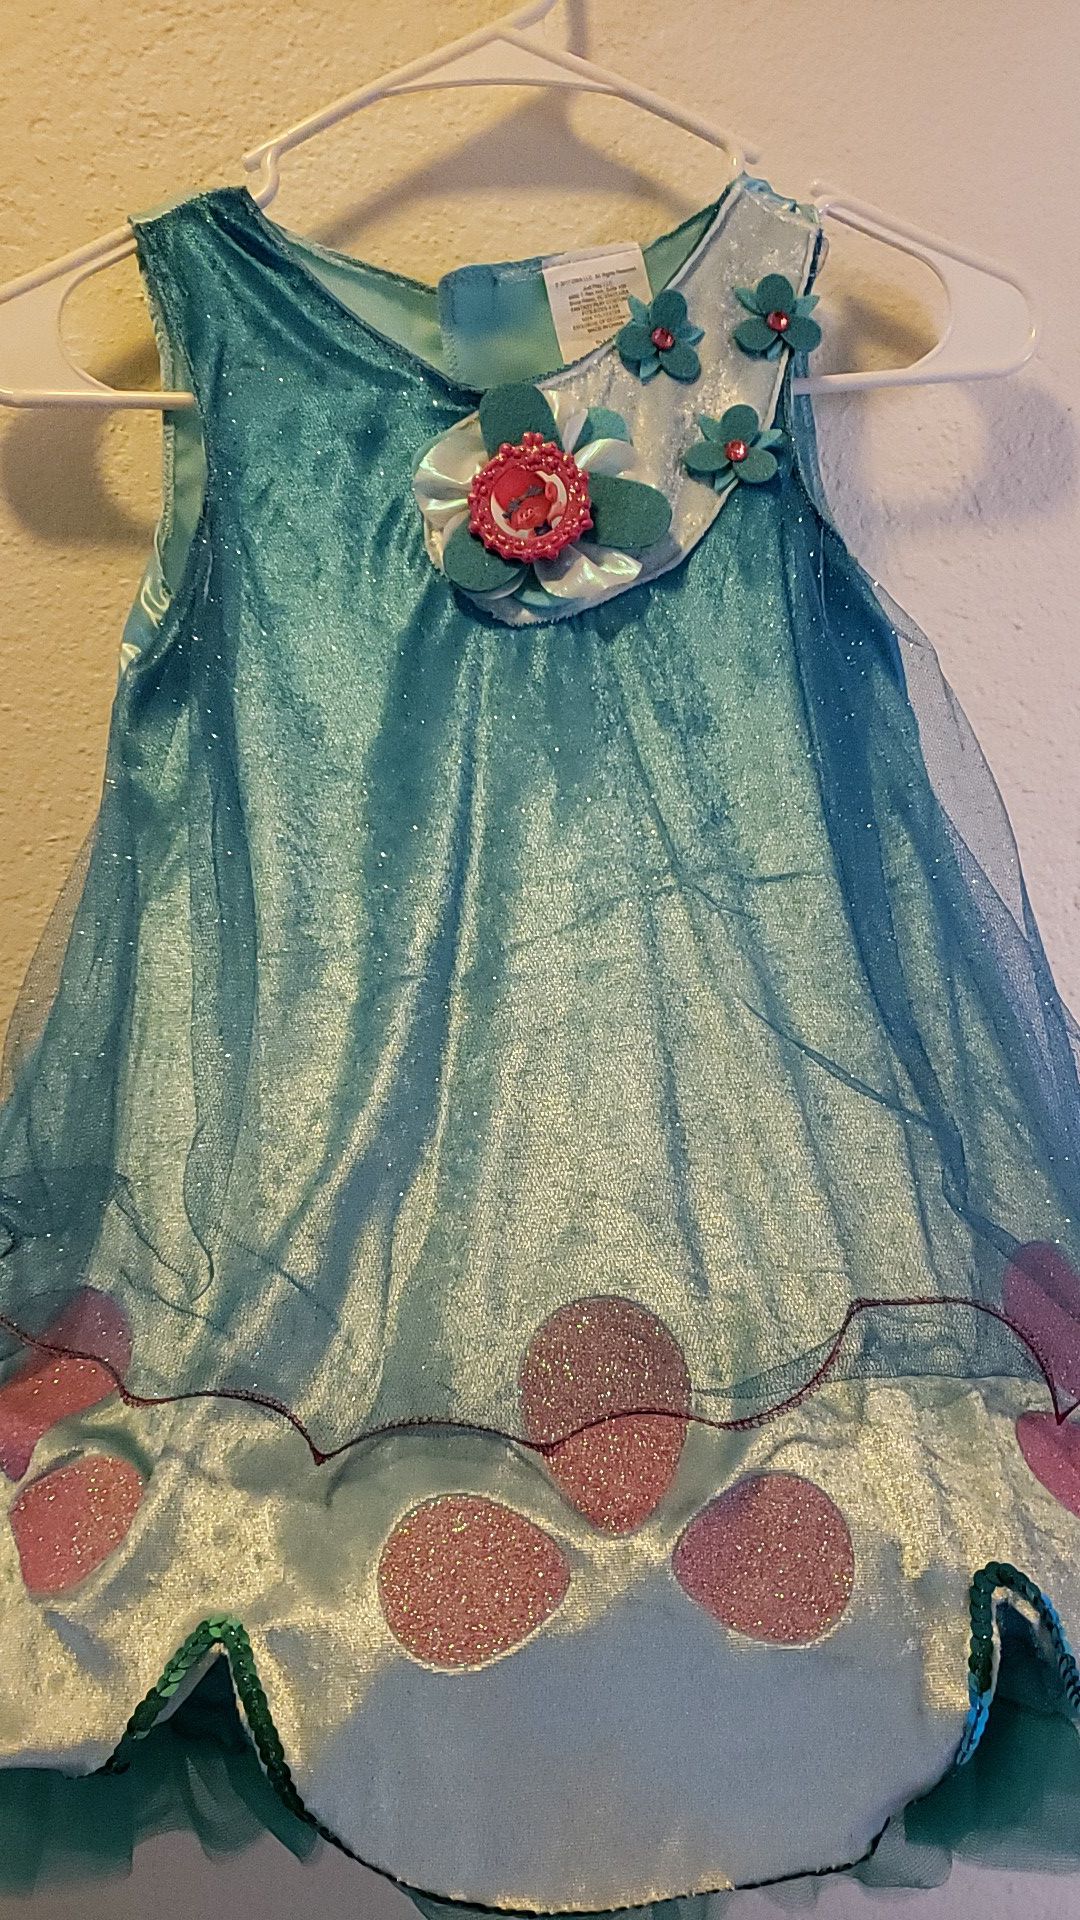 Poppy dress costume